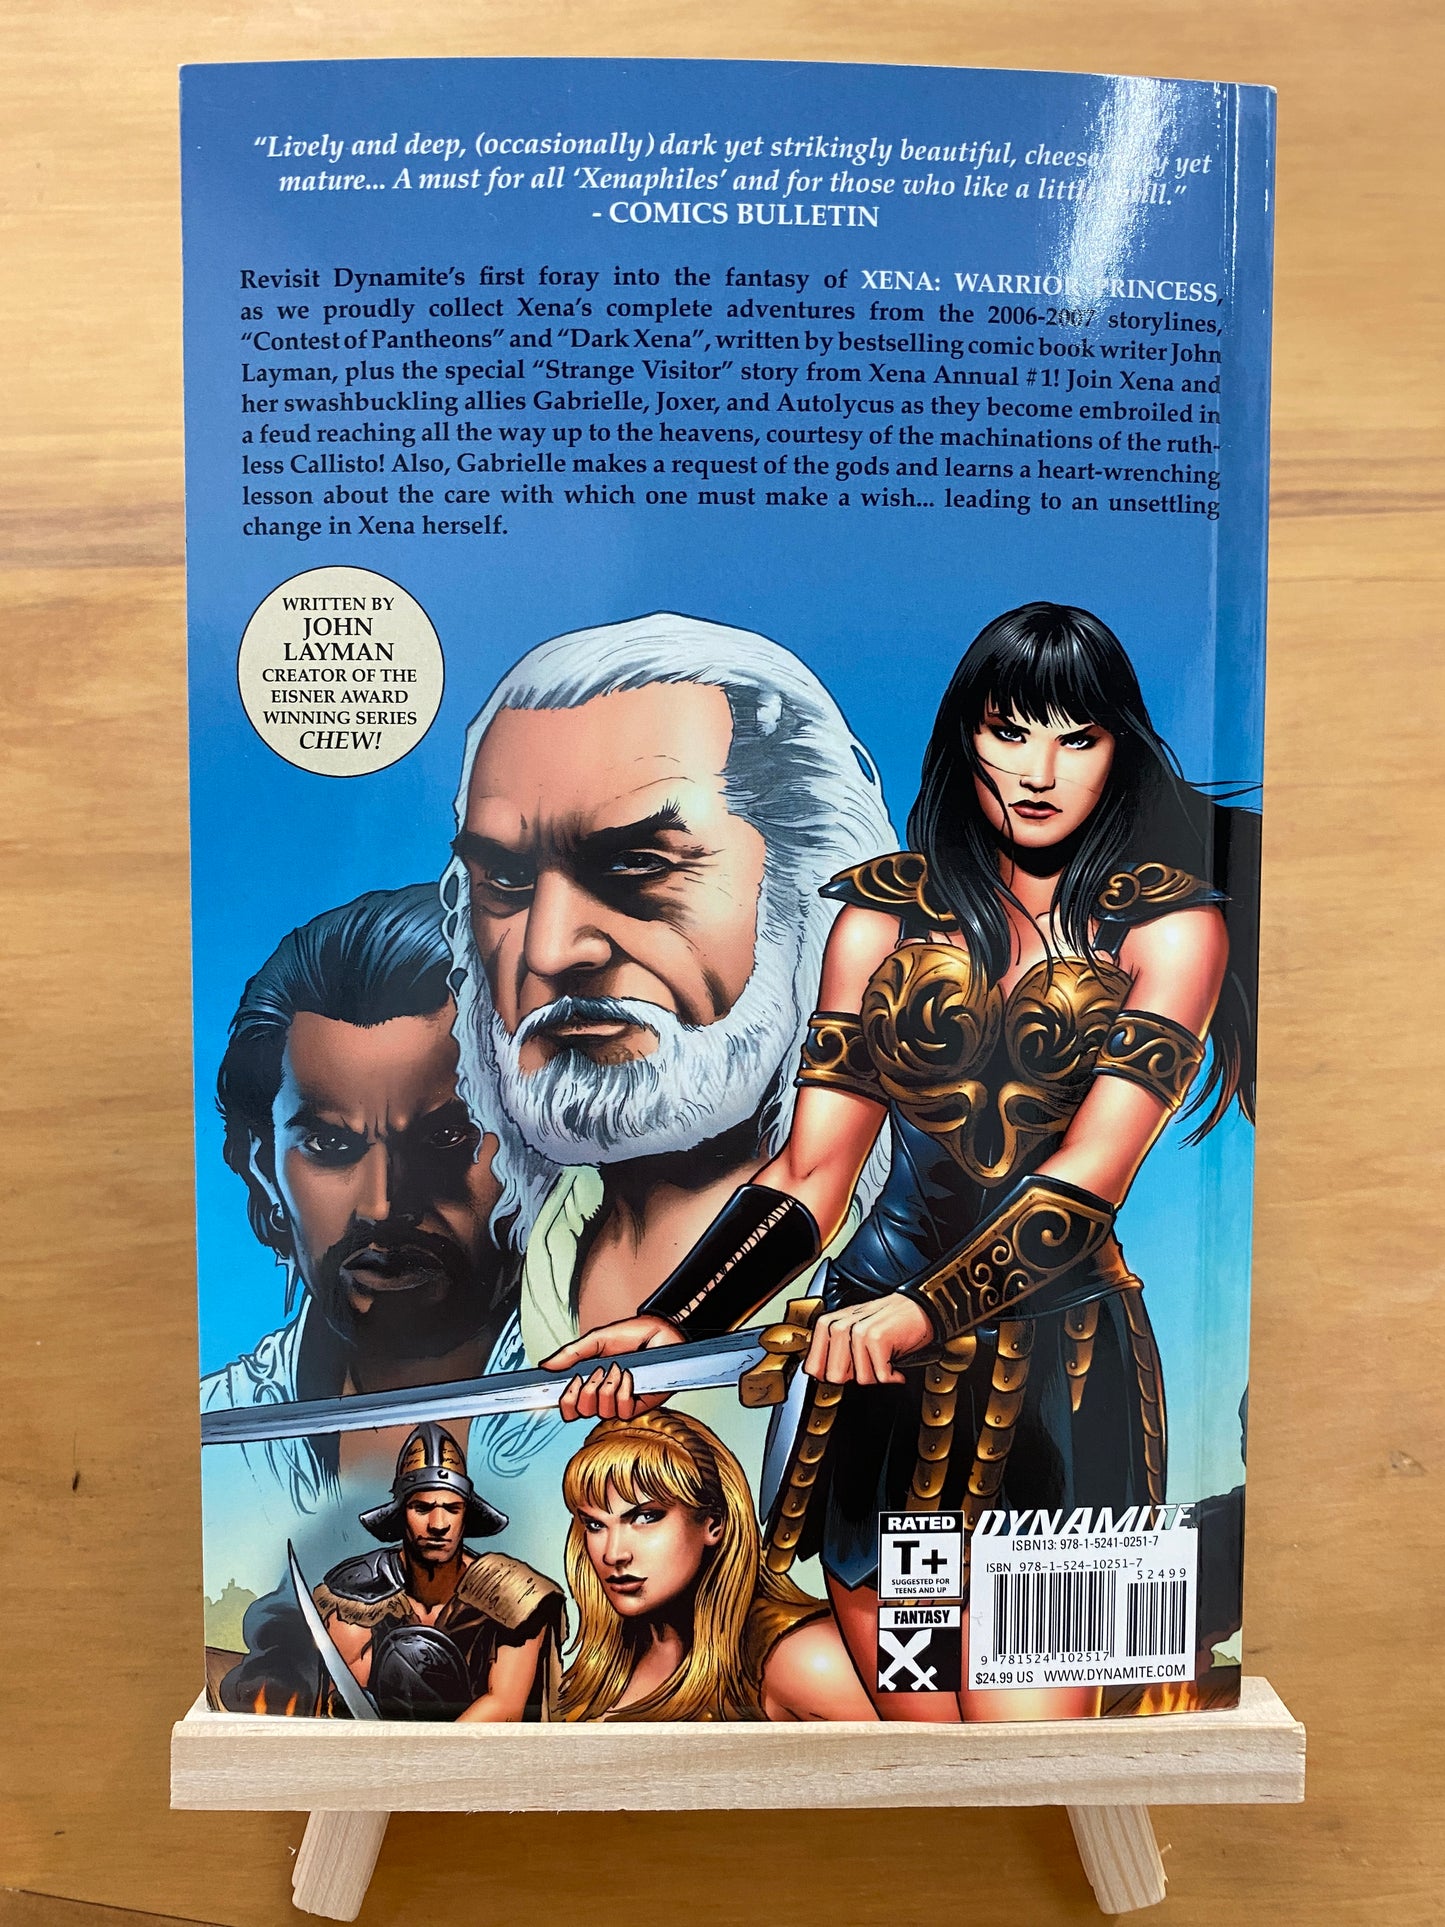 Xena: Warrior Princess Omnibus Volume 1